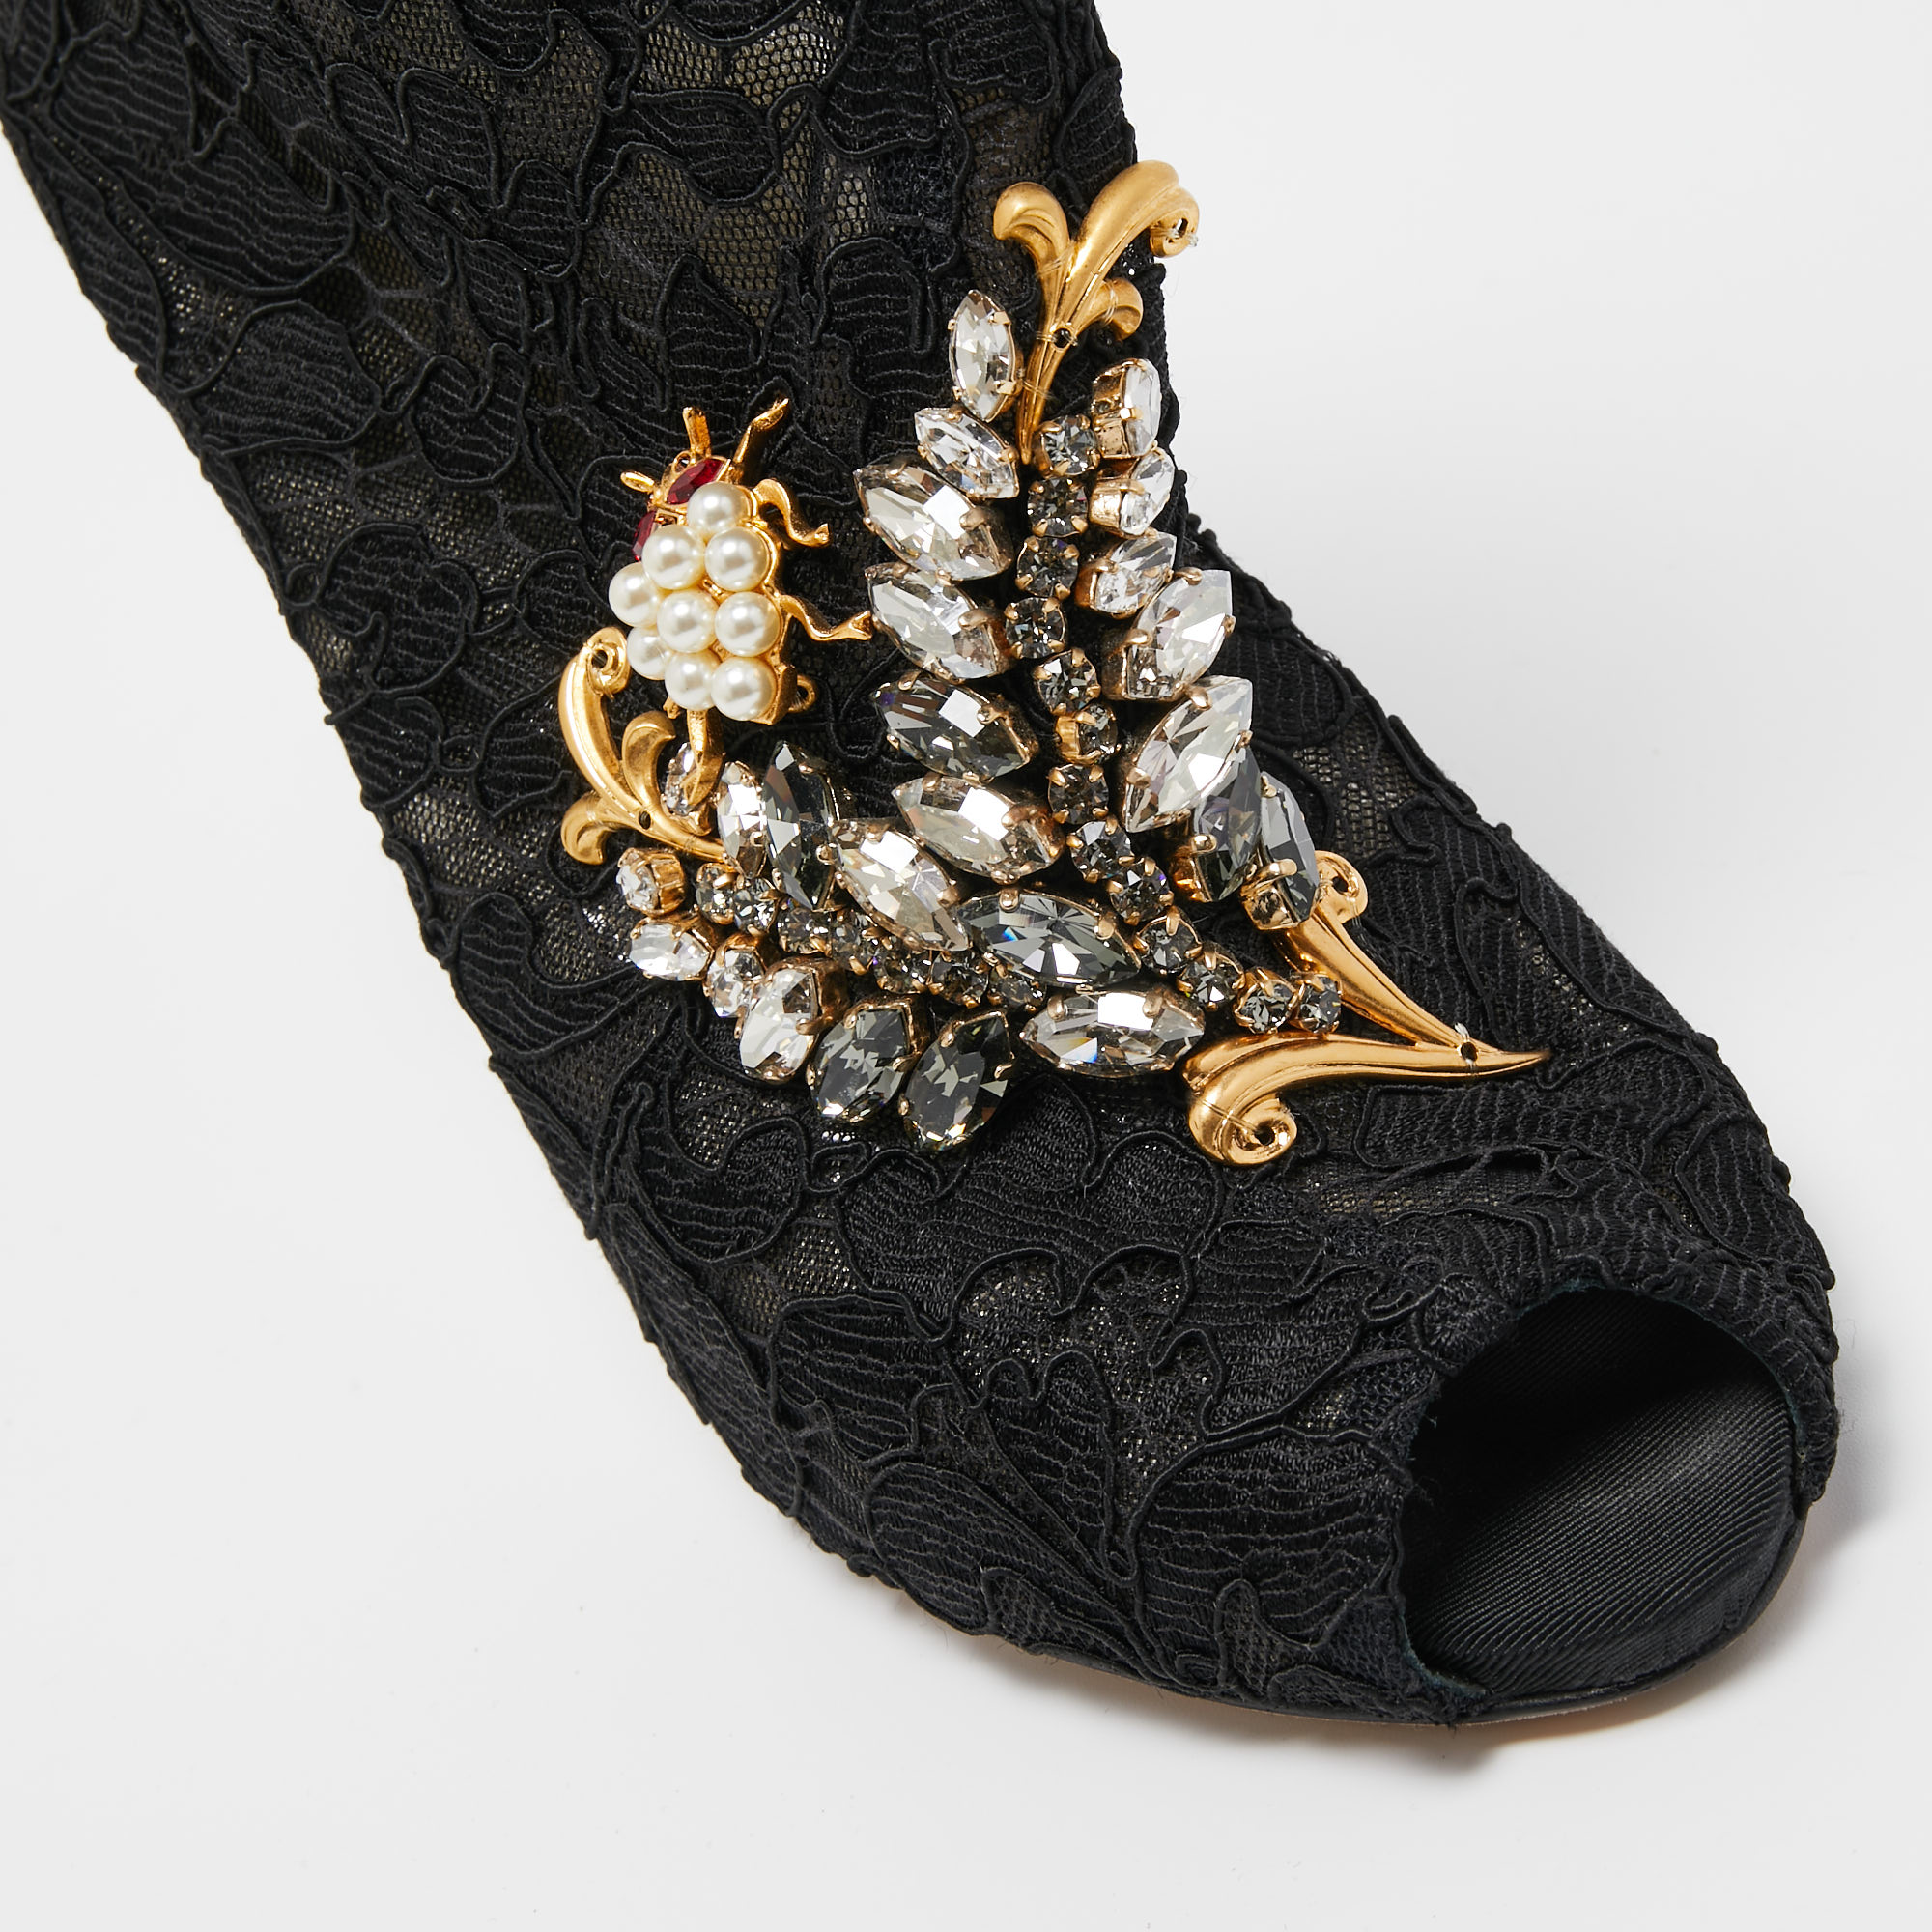 Dolce & Gabbana Black Lace Crystal Embellished Peep Toe Booties Size 37.5